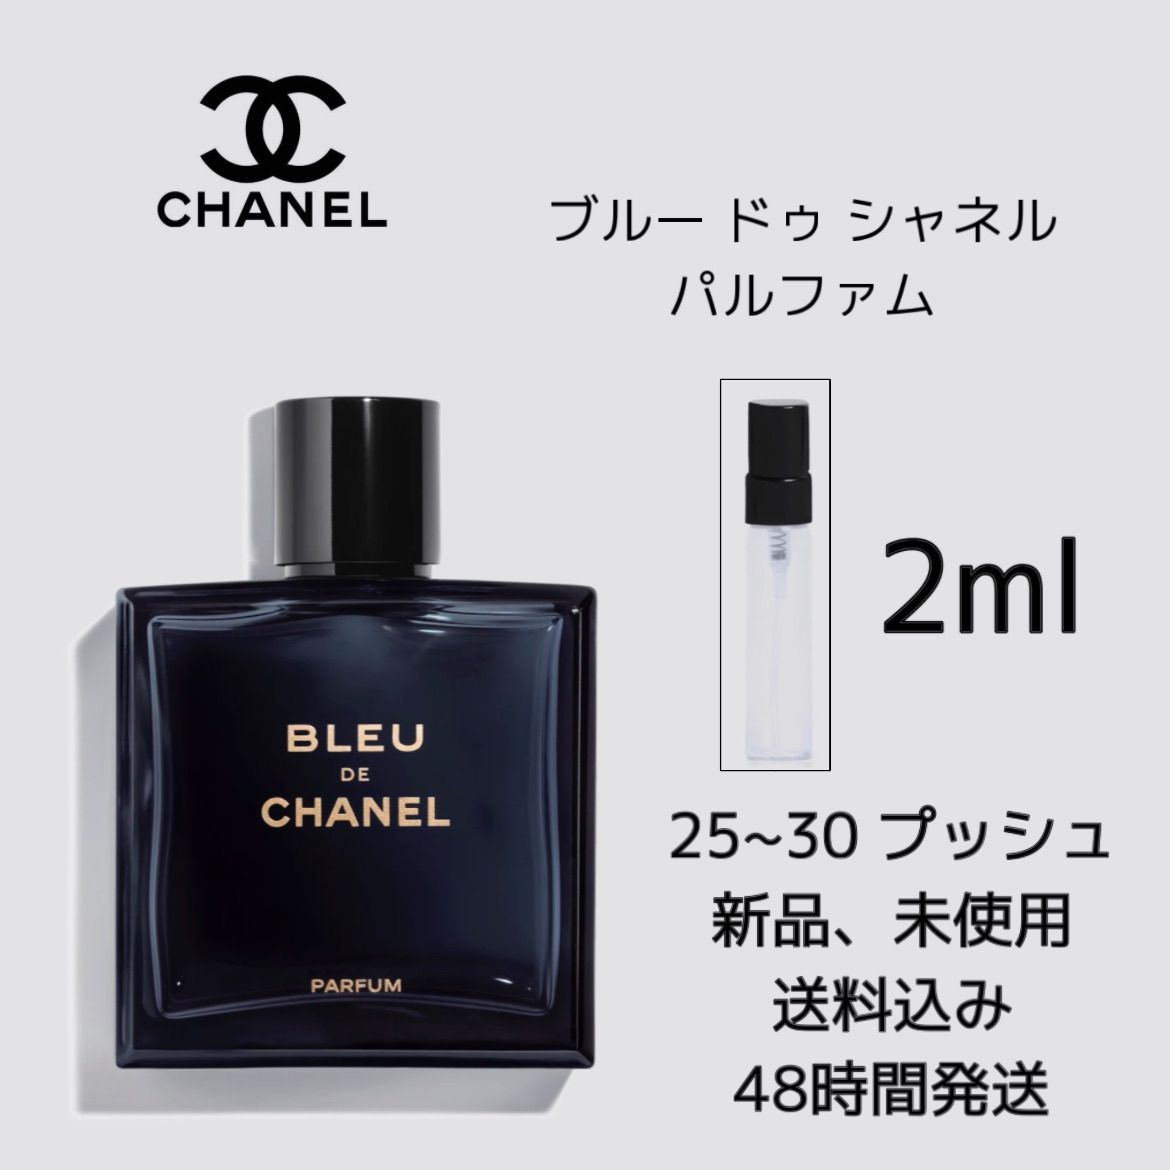 CHANEL BLEU DE CHANEL PARFUMシャネル パルファム10ML香水